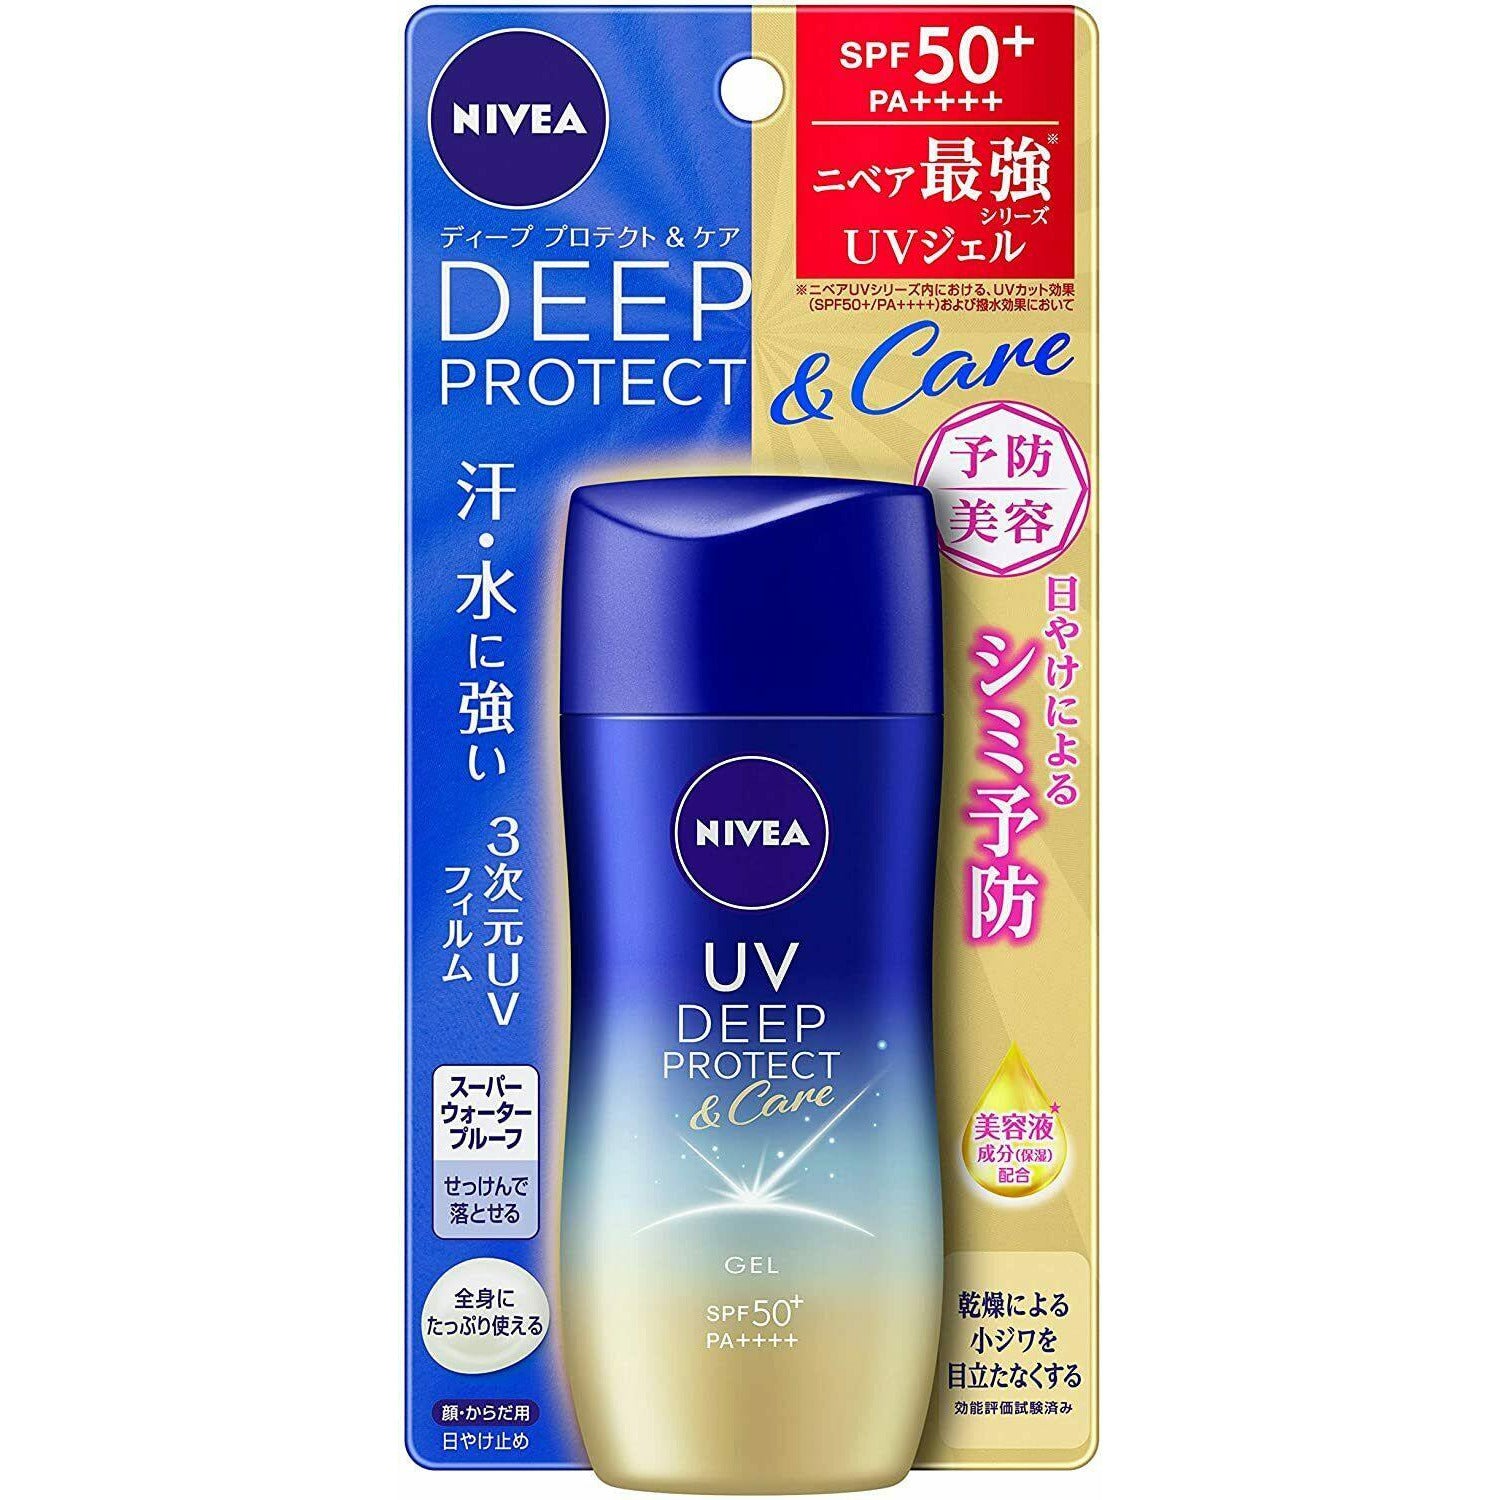 2021 NIVEA UV Deep Protect & Care Gel 80ml SUNSCREEN SPF50+/PA++++ Japan